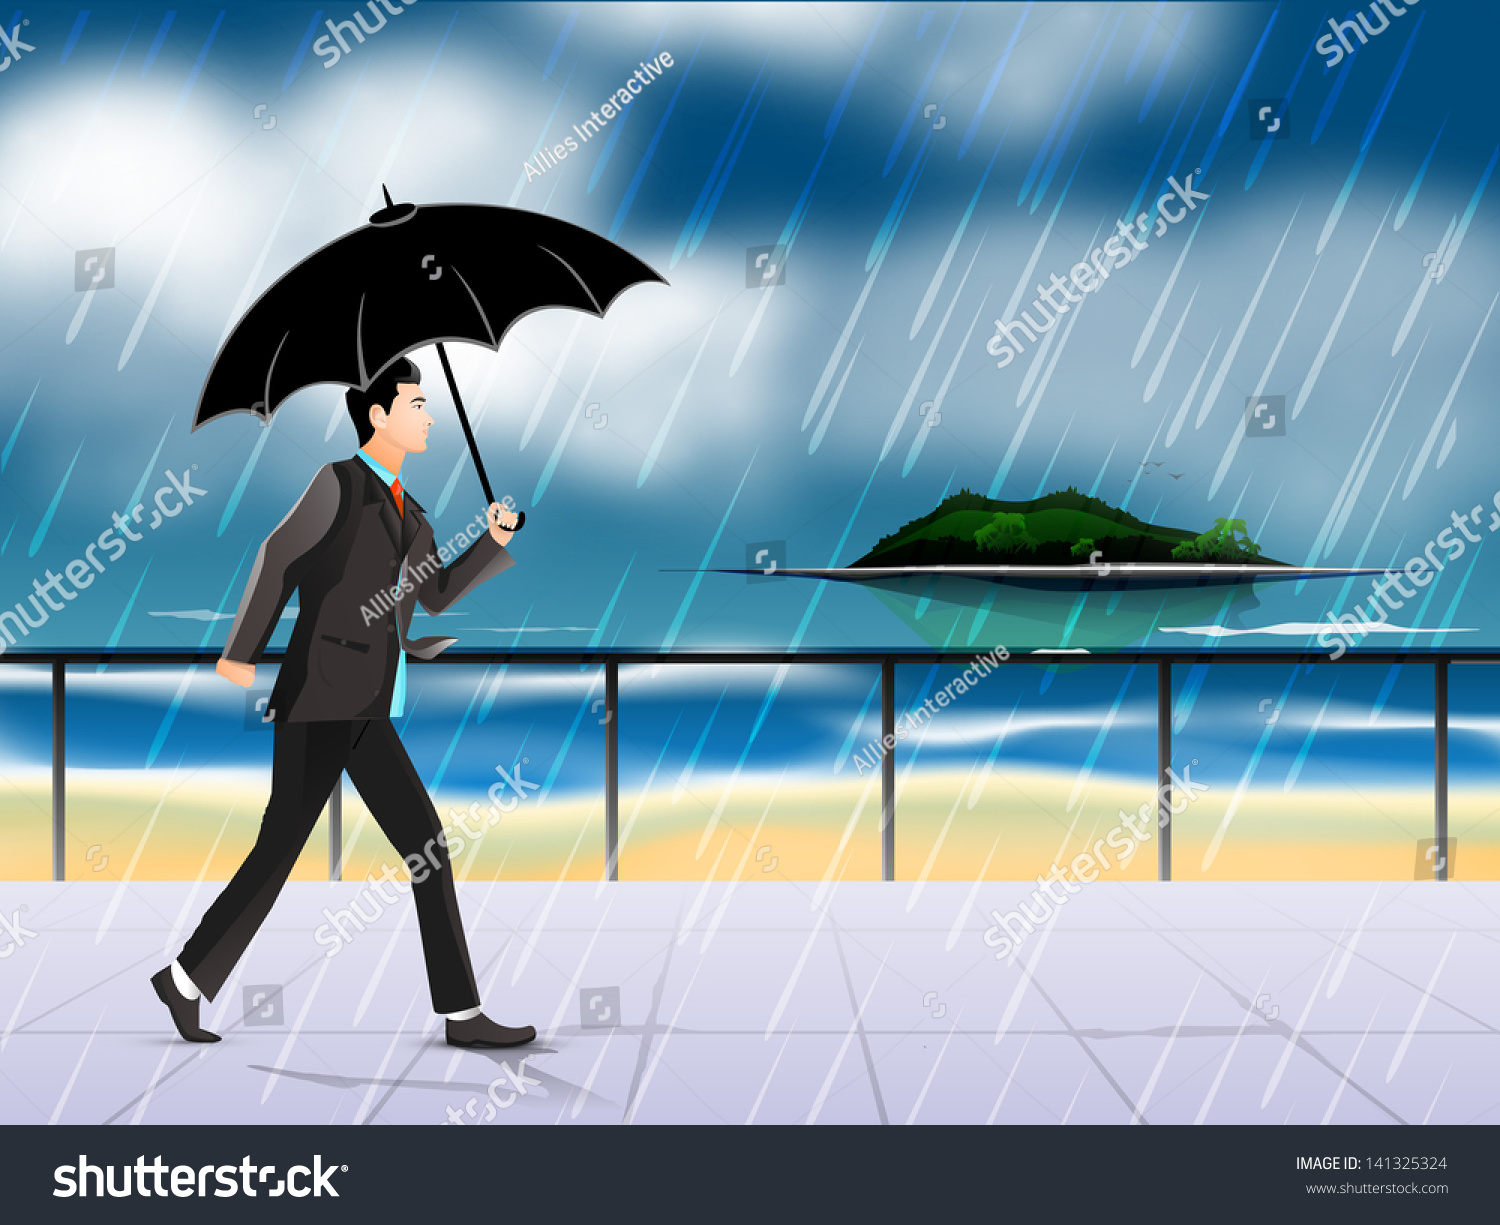 clip art images rainy season - photo #47